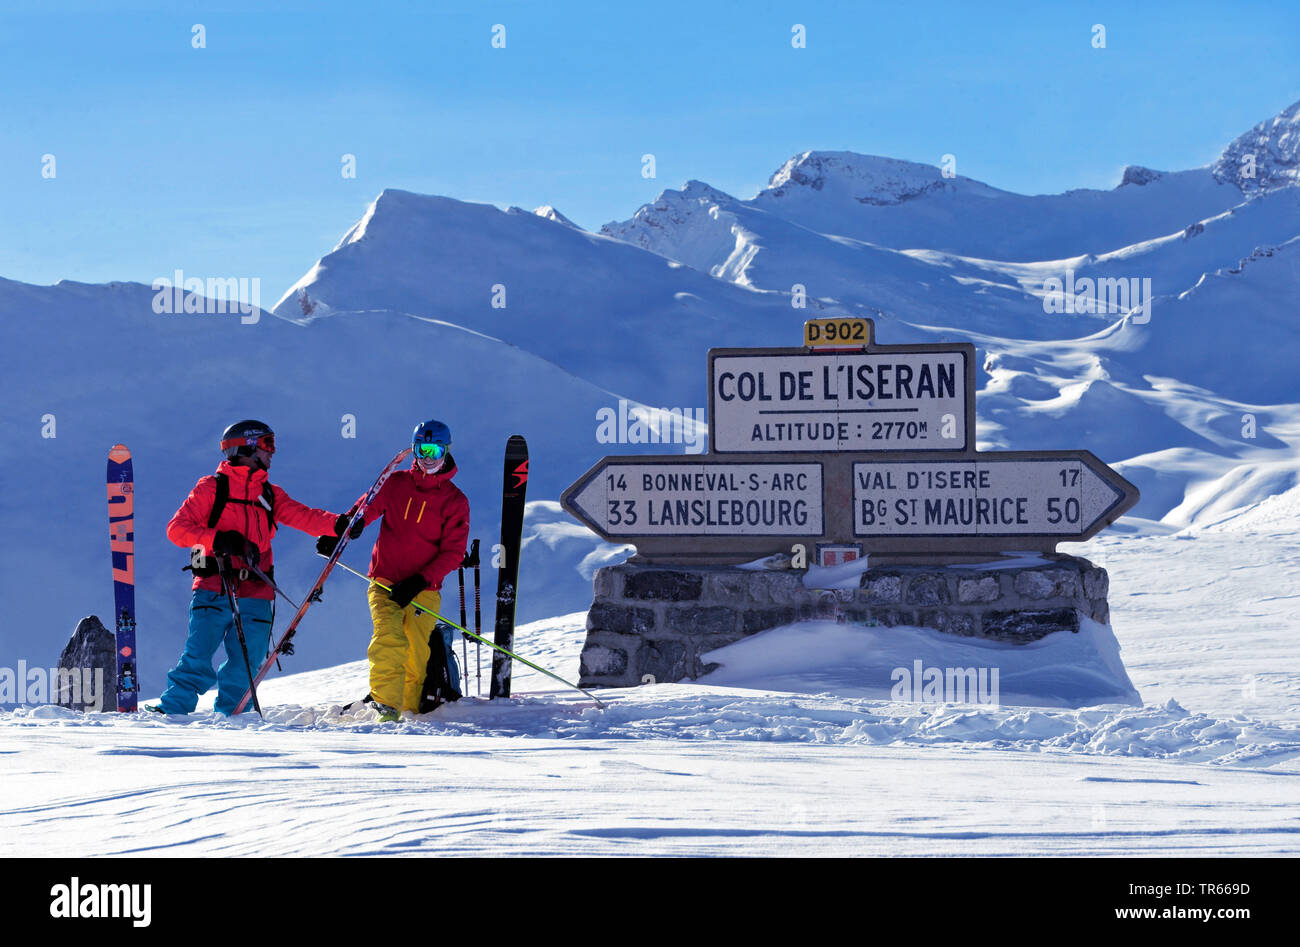 ski touring at the Col de l'Iseran, France, Savoie, Val d Isere Stock Photo